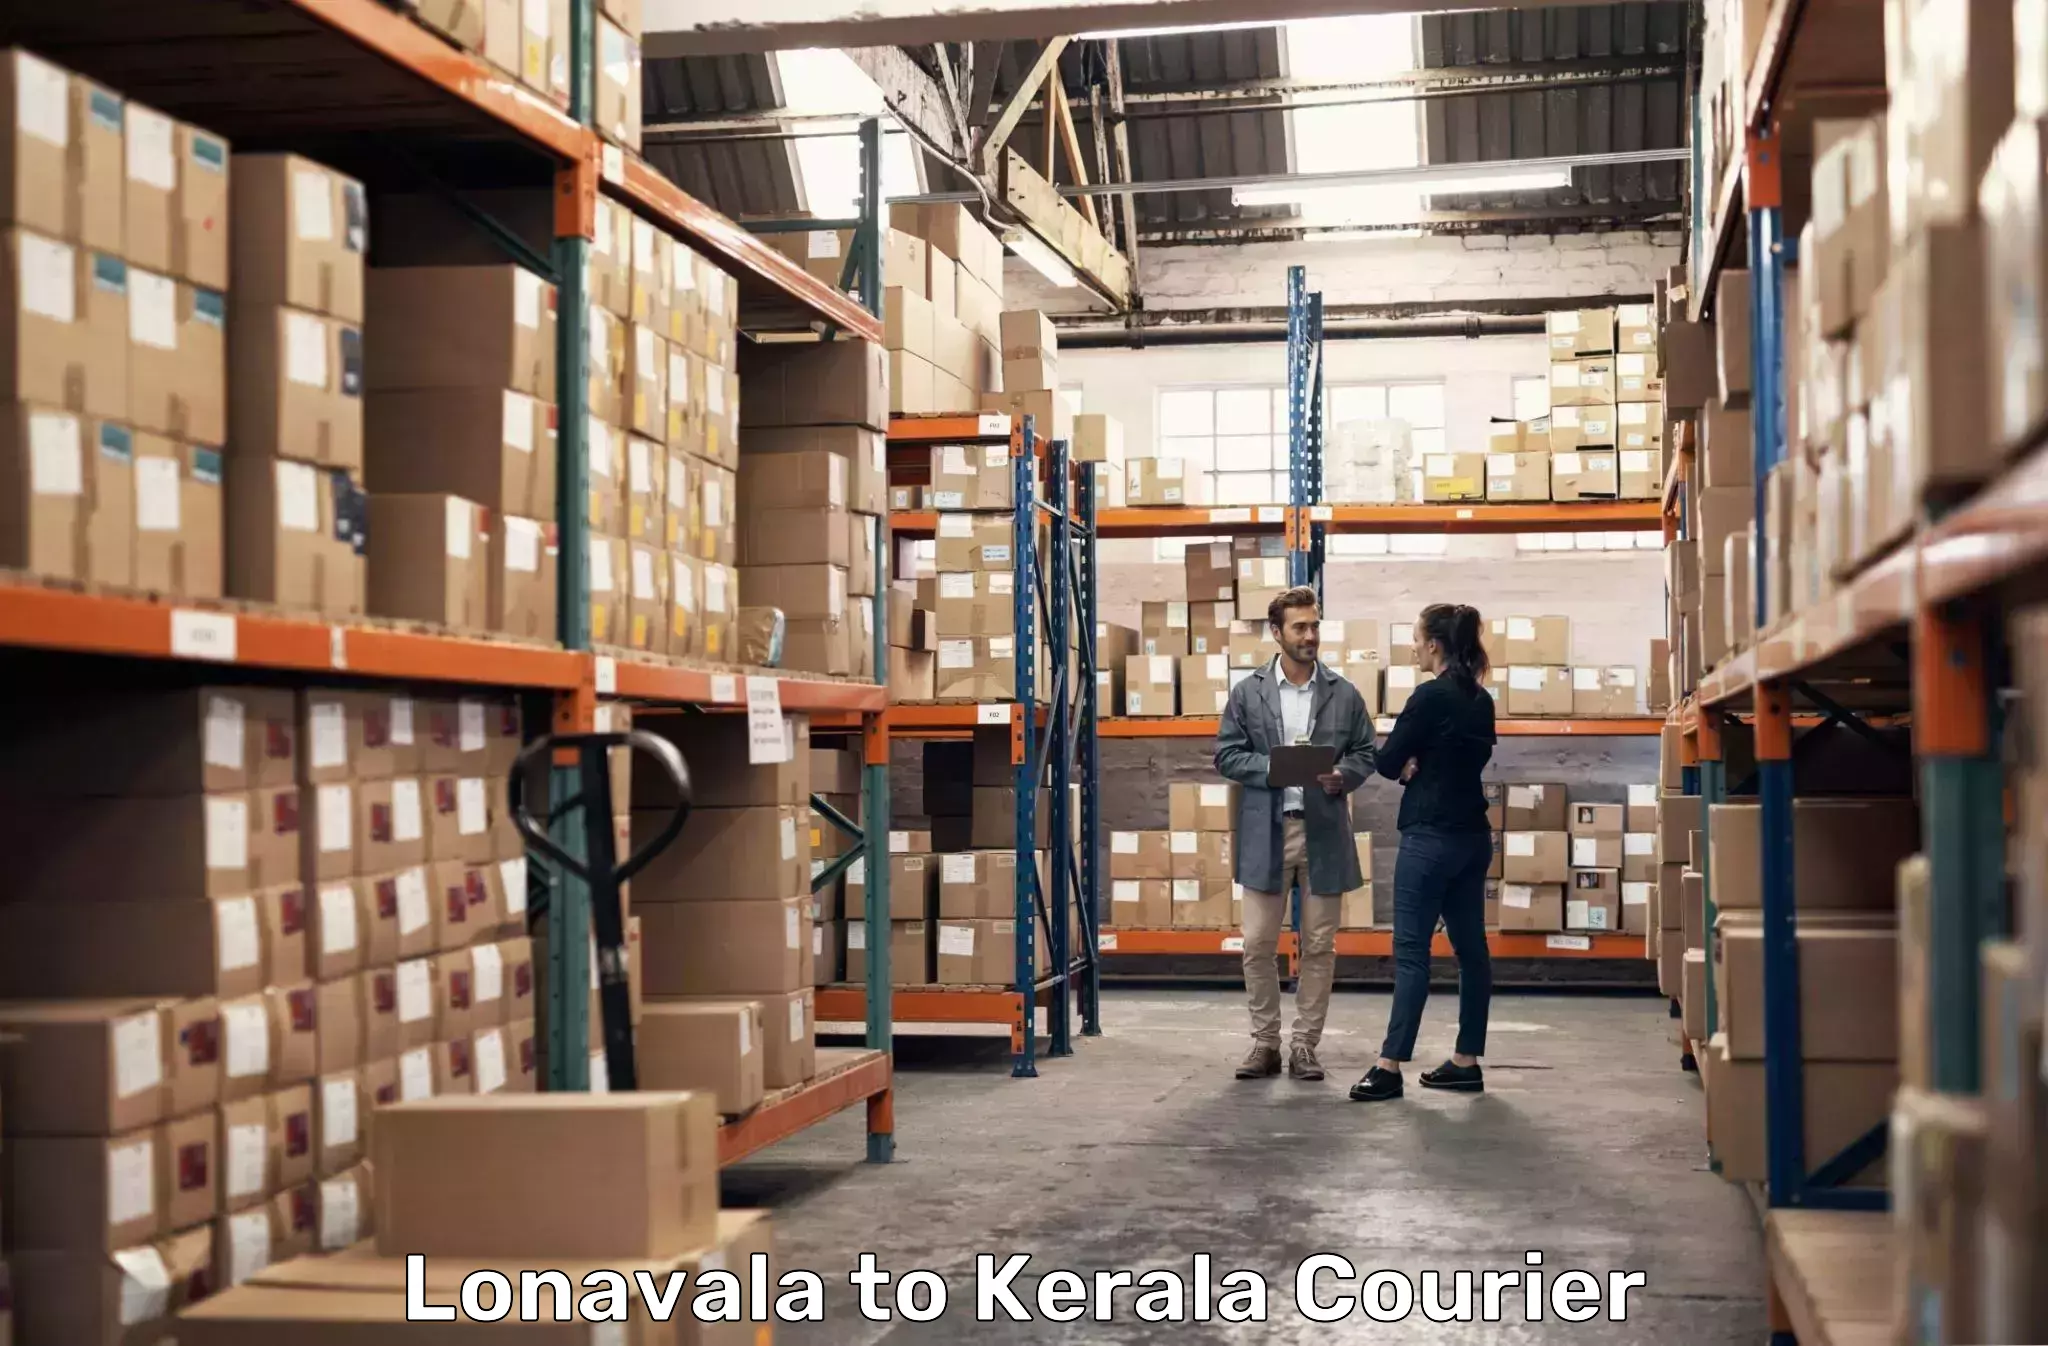 Courier app Lonavala to Cherthala